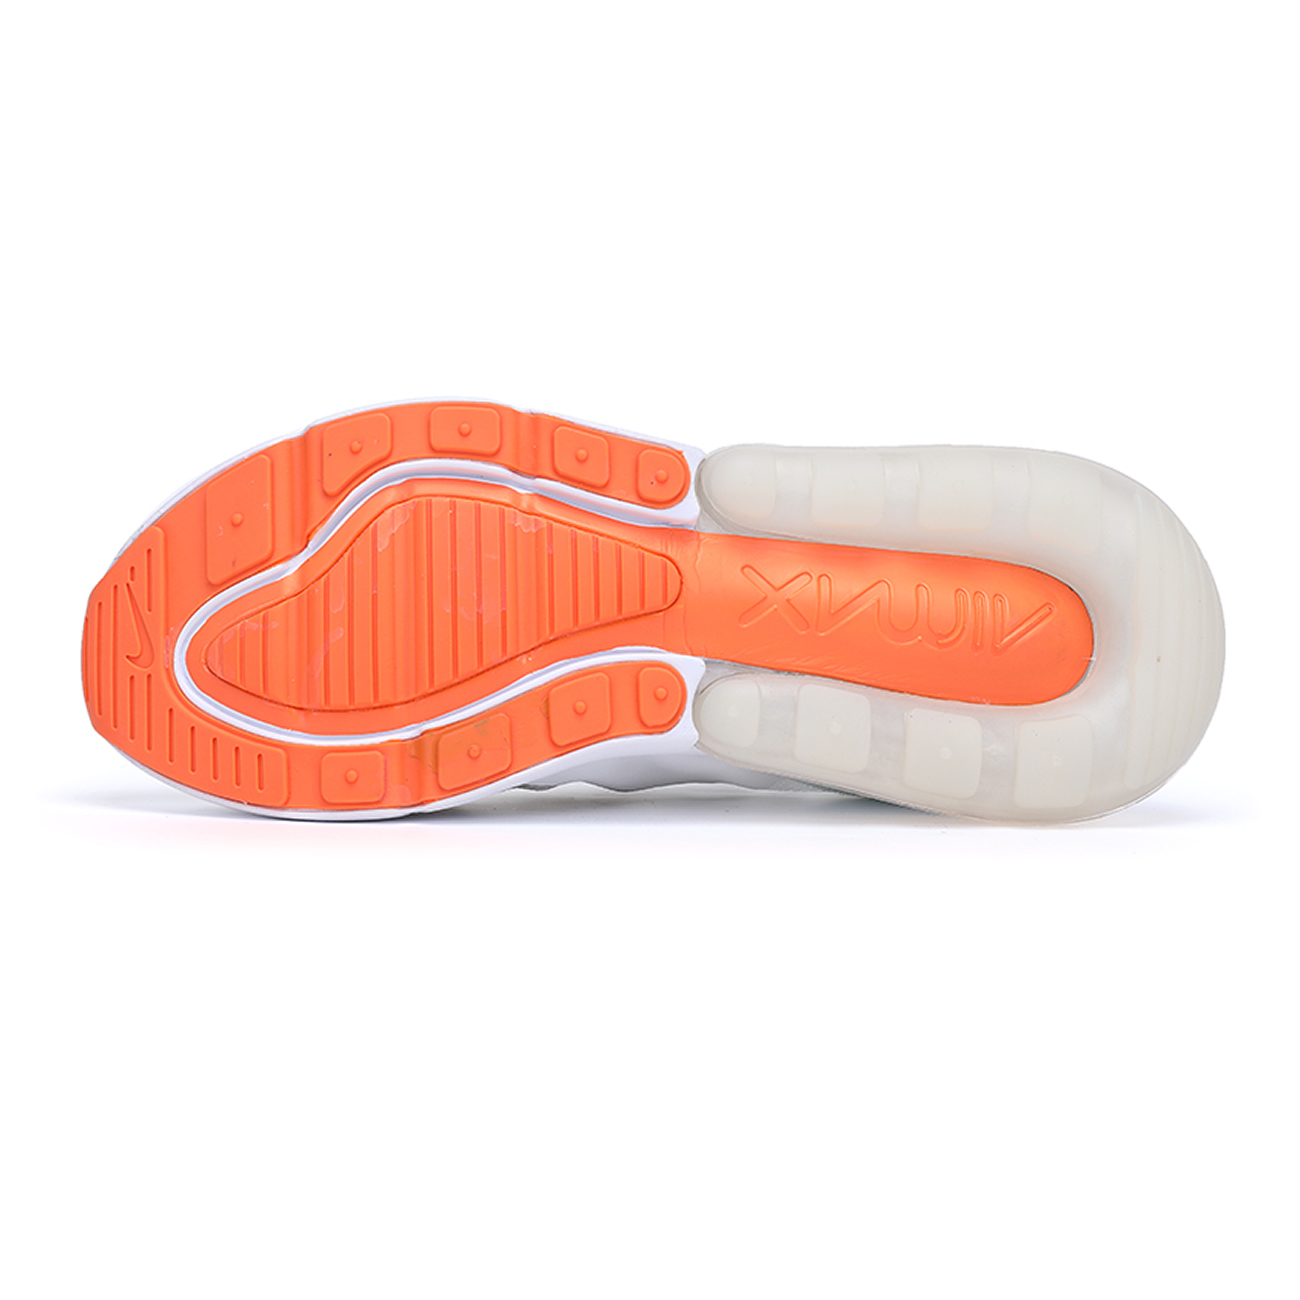 Nike air max 270 White orange